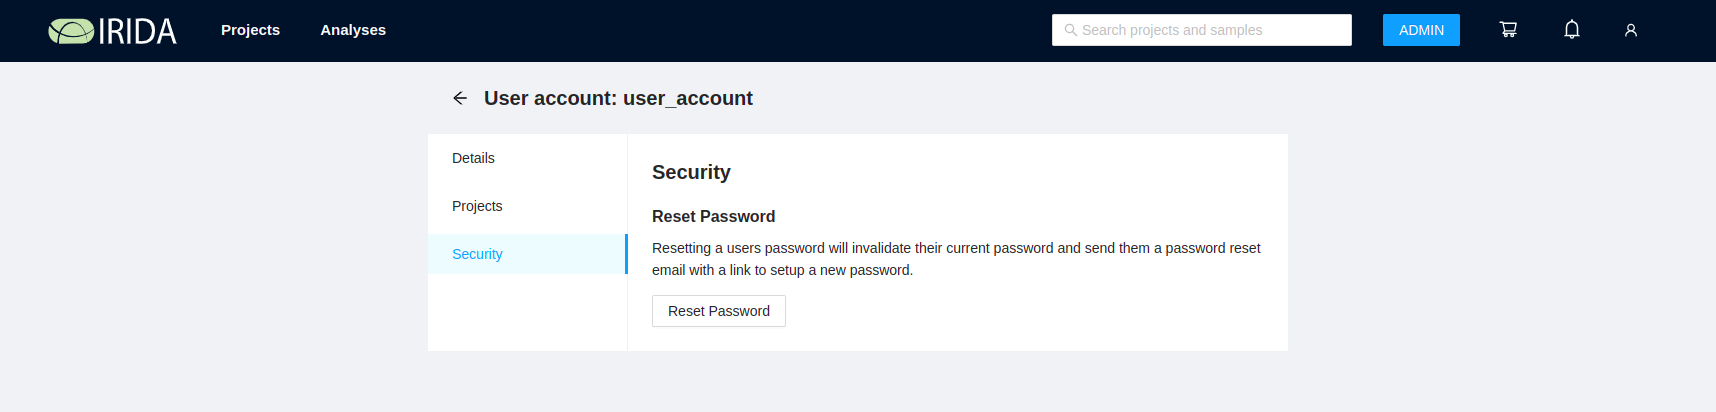 User details reset password button.